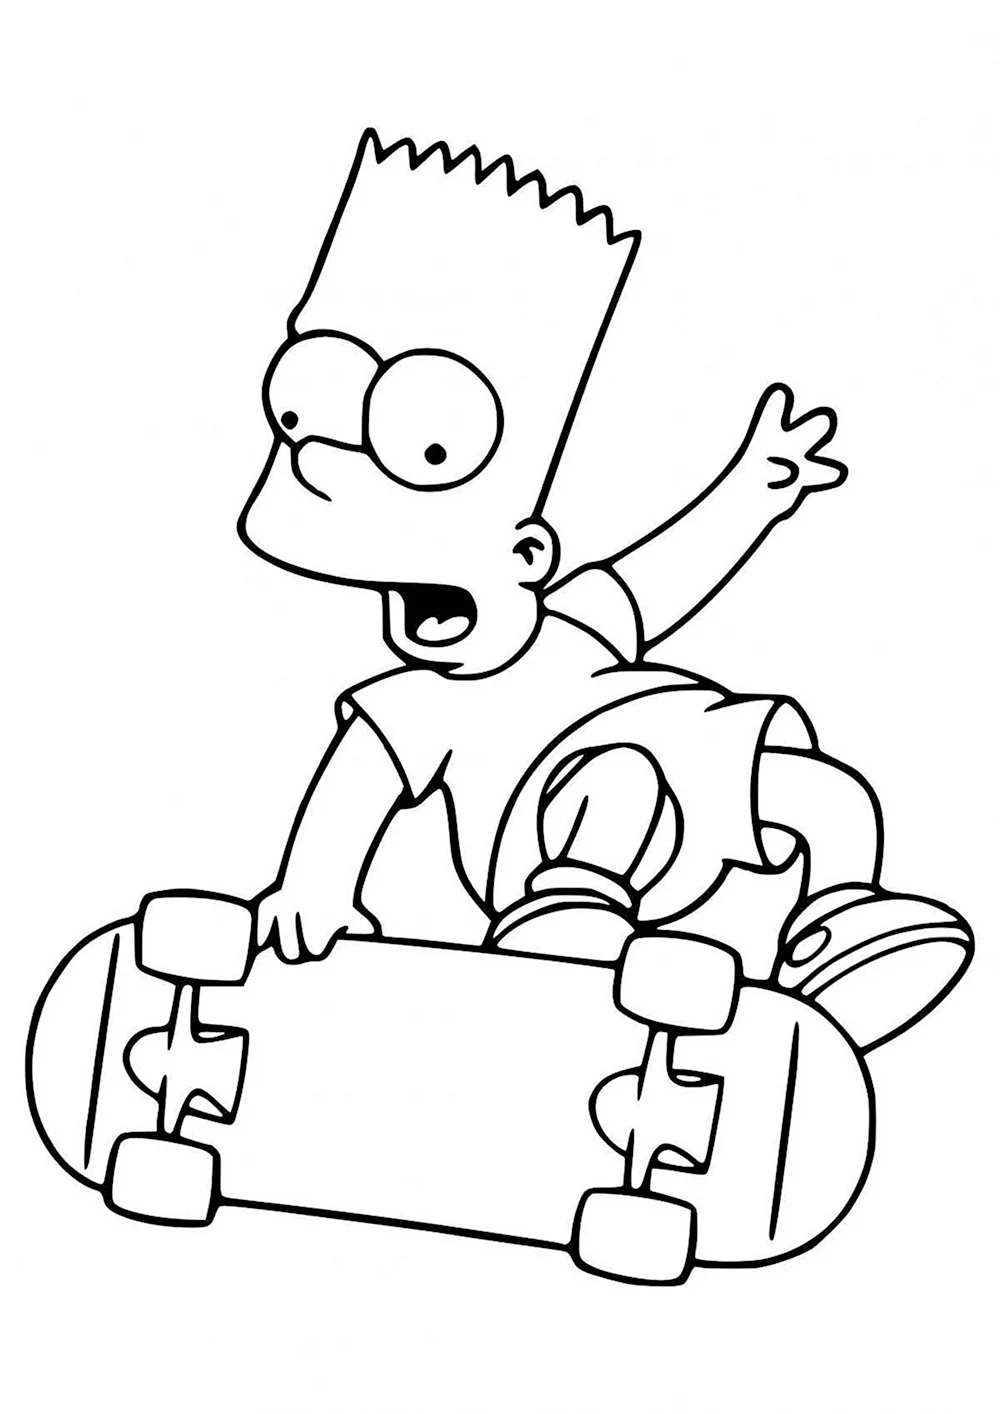 Барт симпсон на скейте